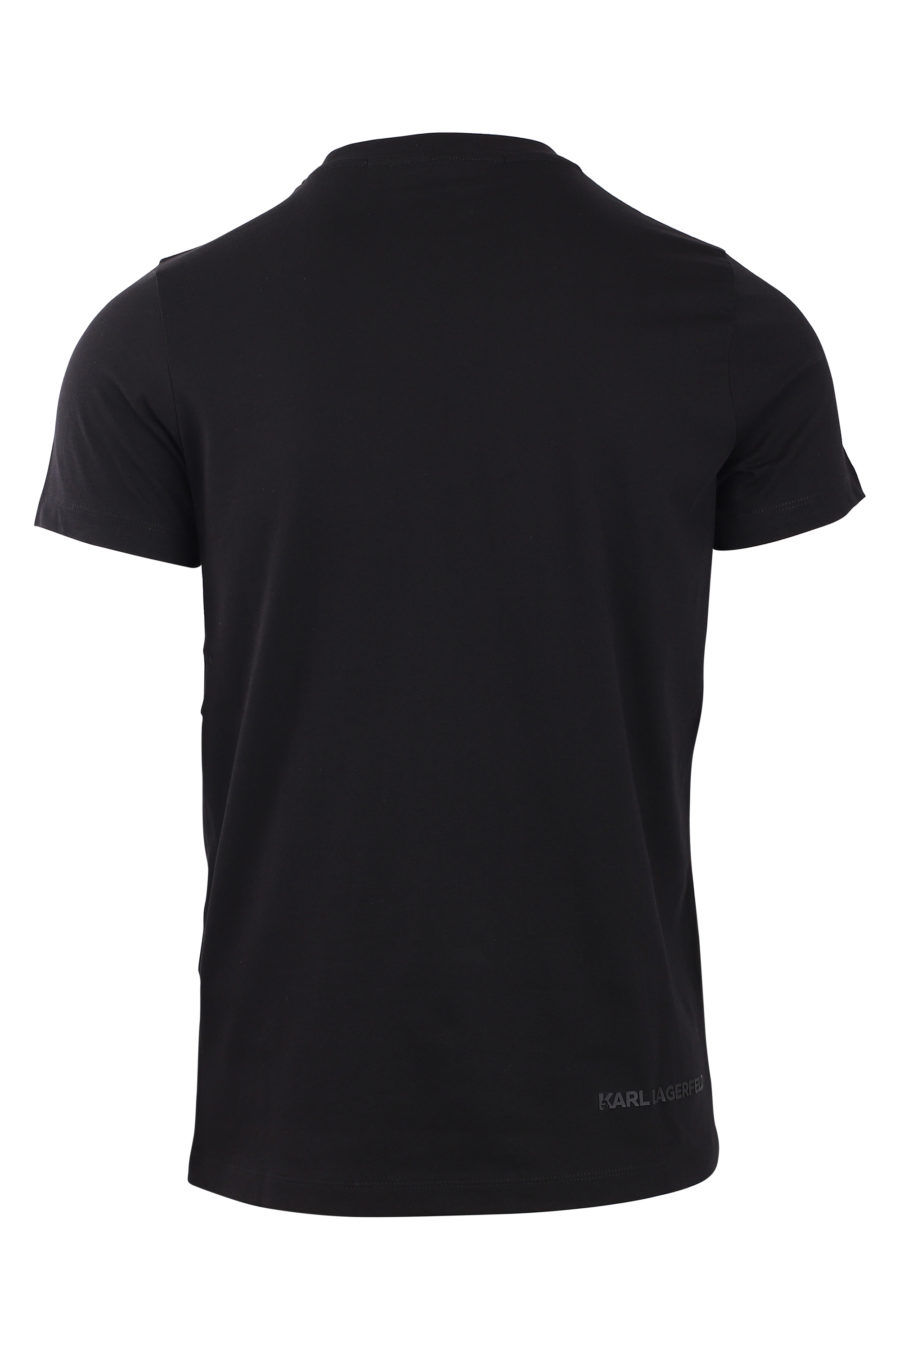 Schwarzes T-Shirt mit fuchsiafarbenem Maxi-Logo - IMG 0808